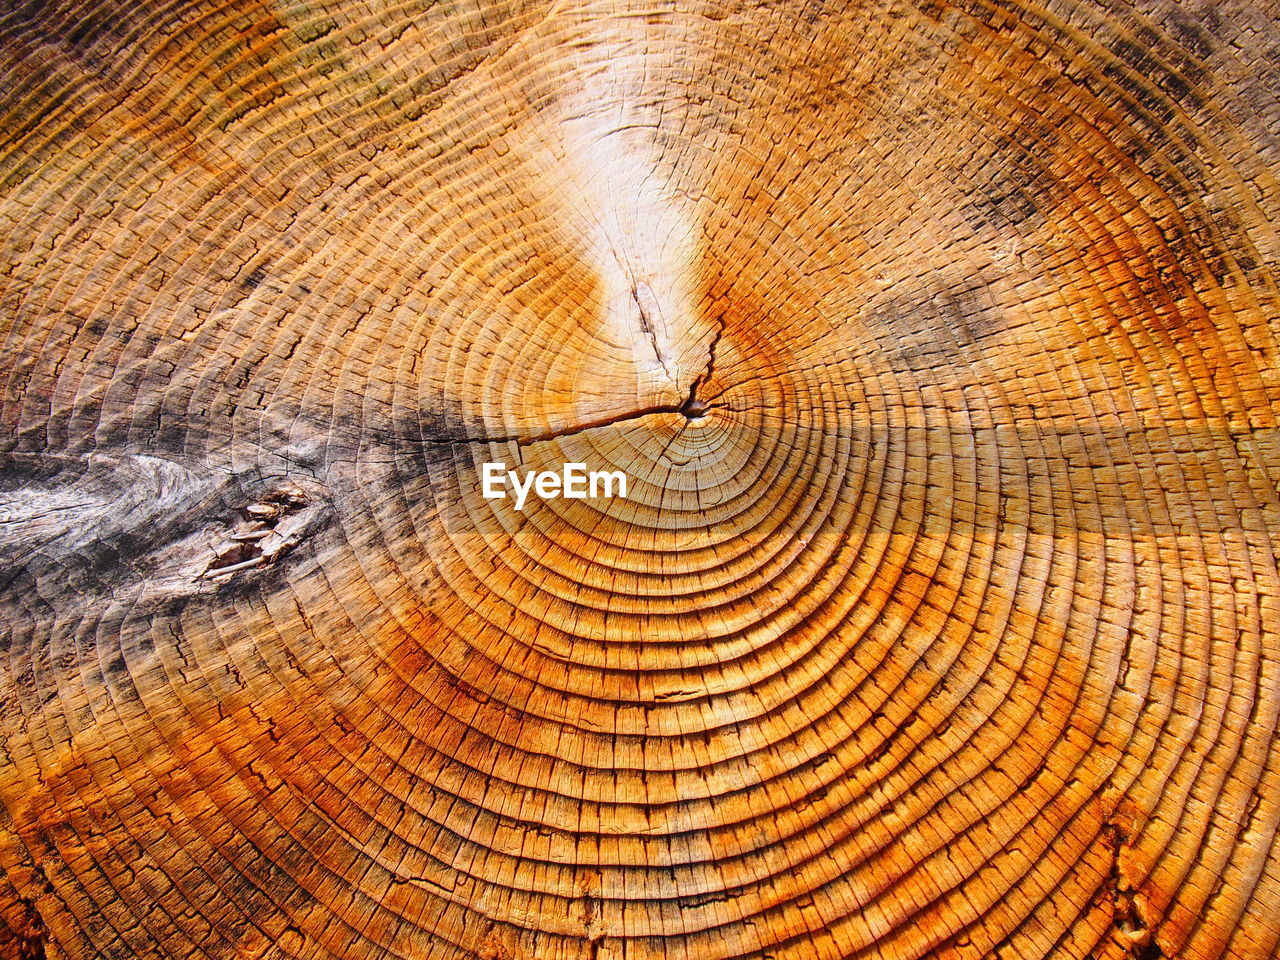 Extreme close-up of tree stump